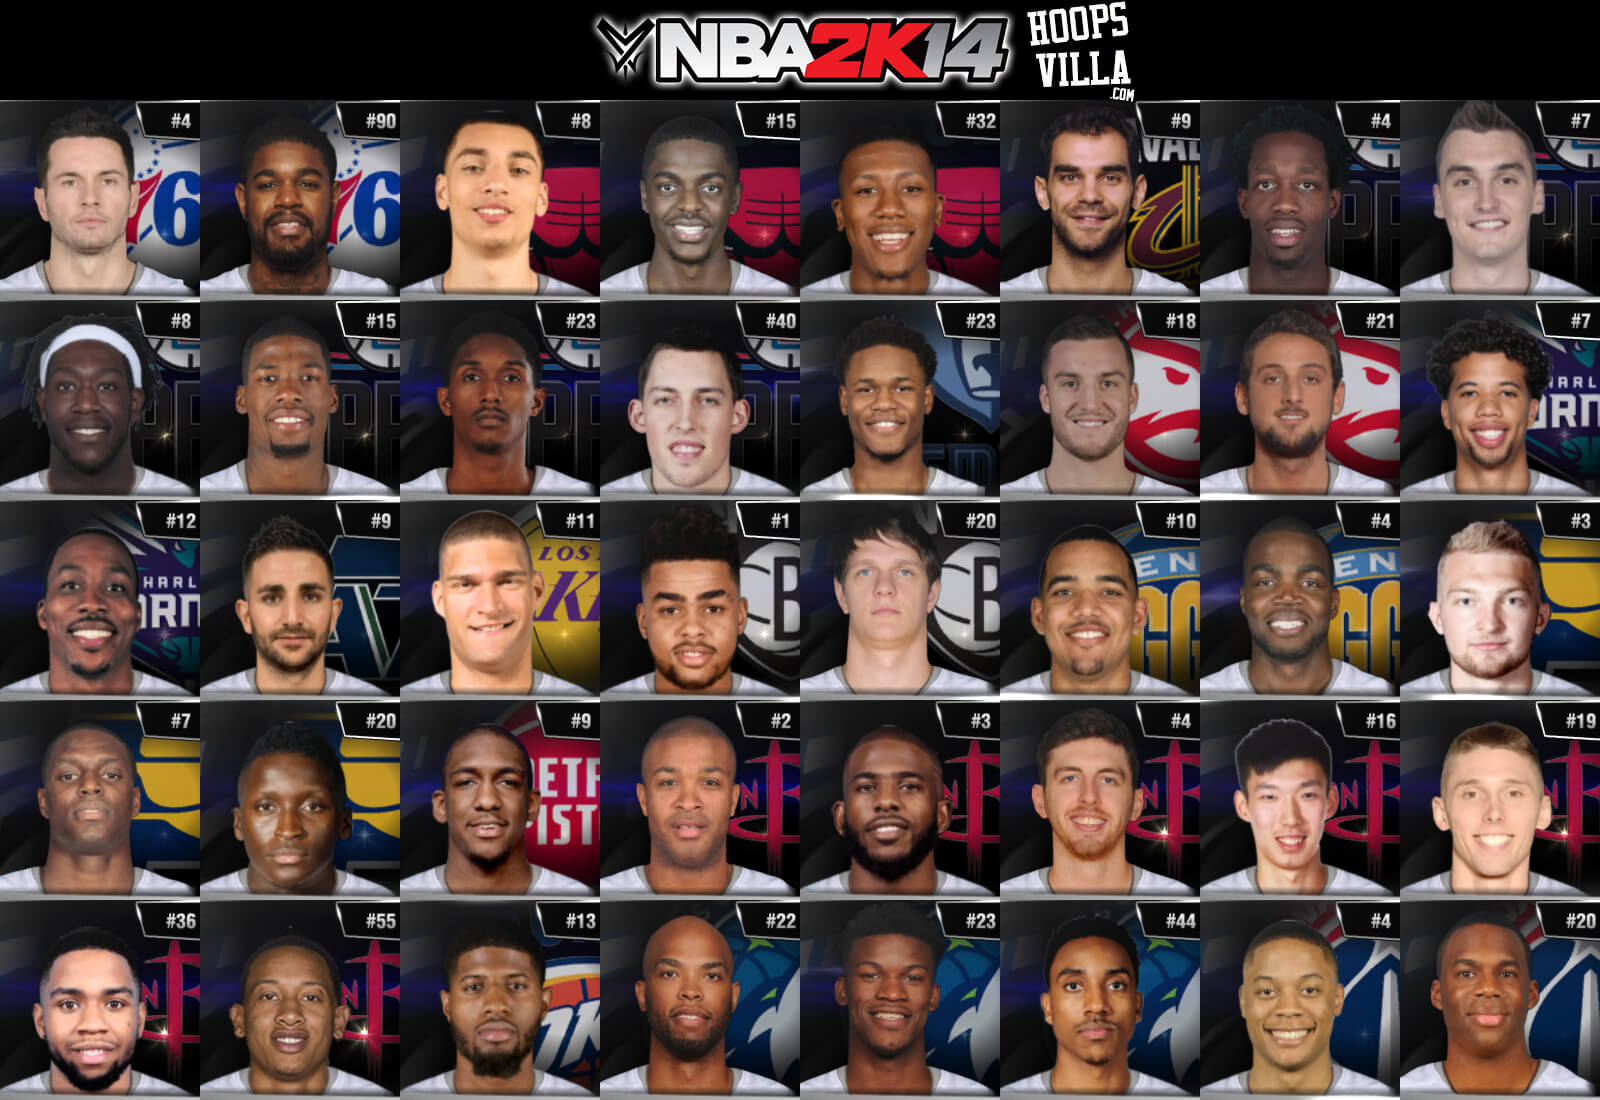 NBA 2k14 Ultimate Roster Update v9.0 July 4th, 2017